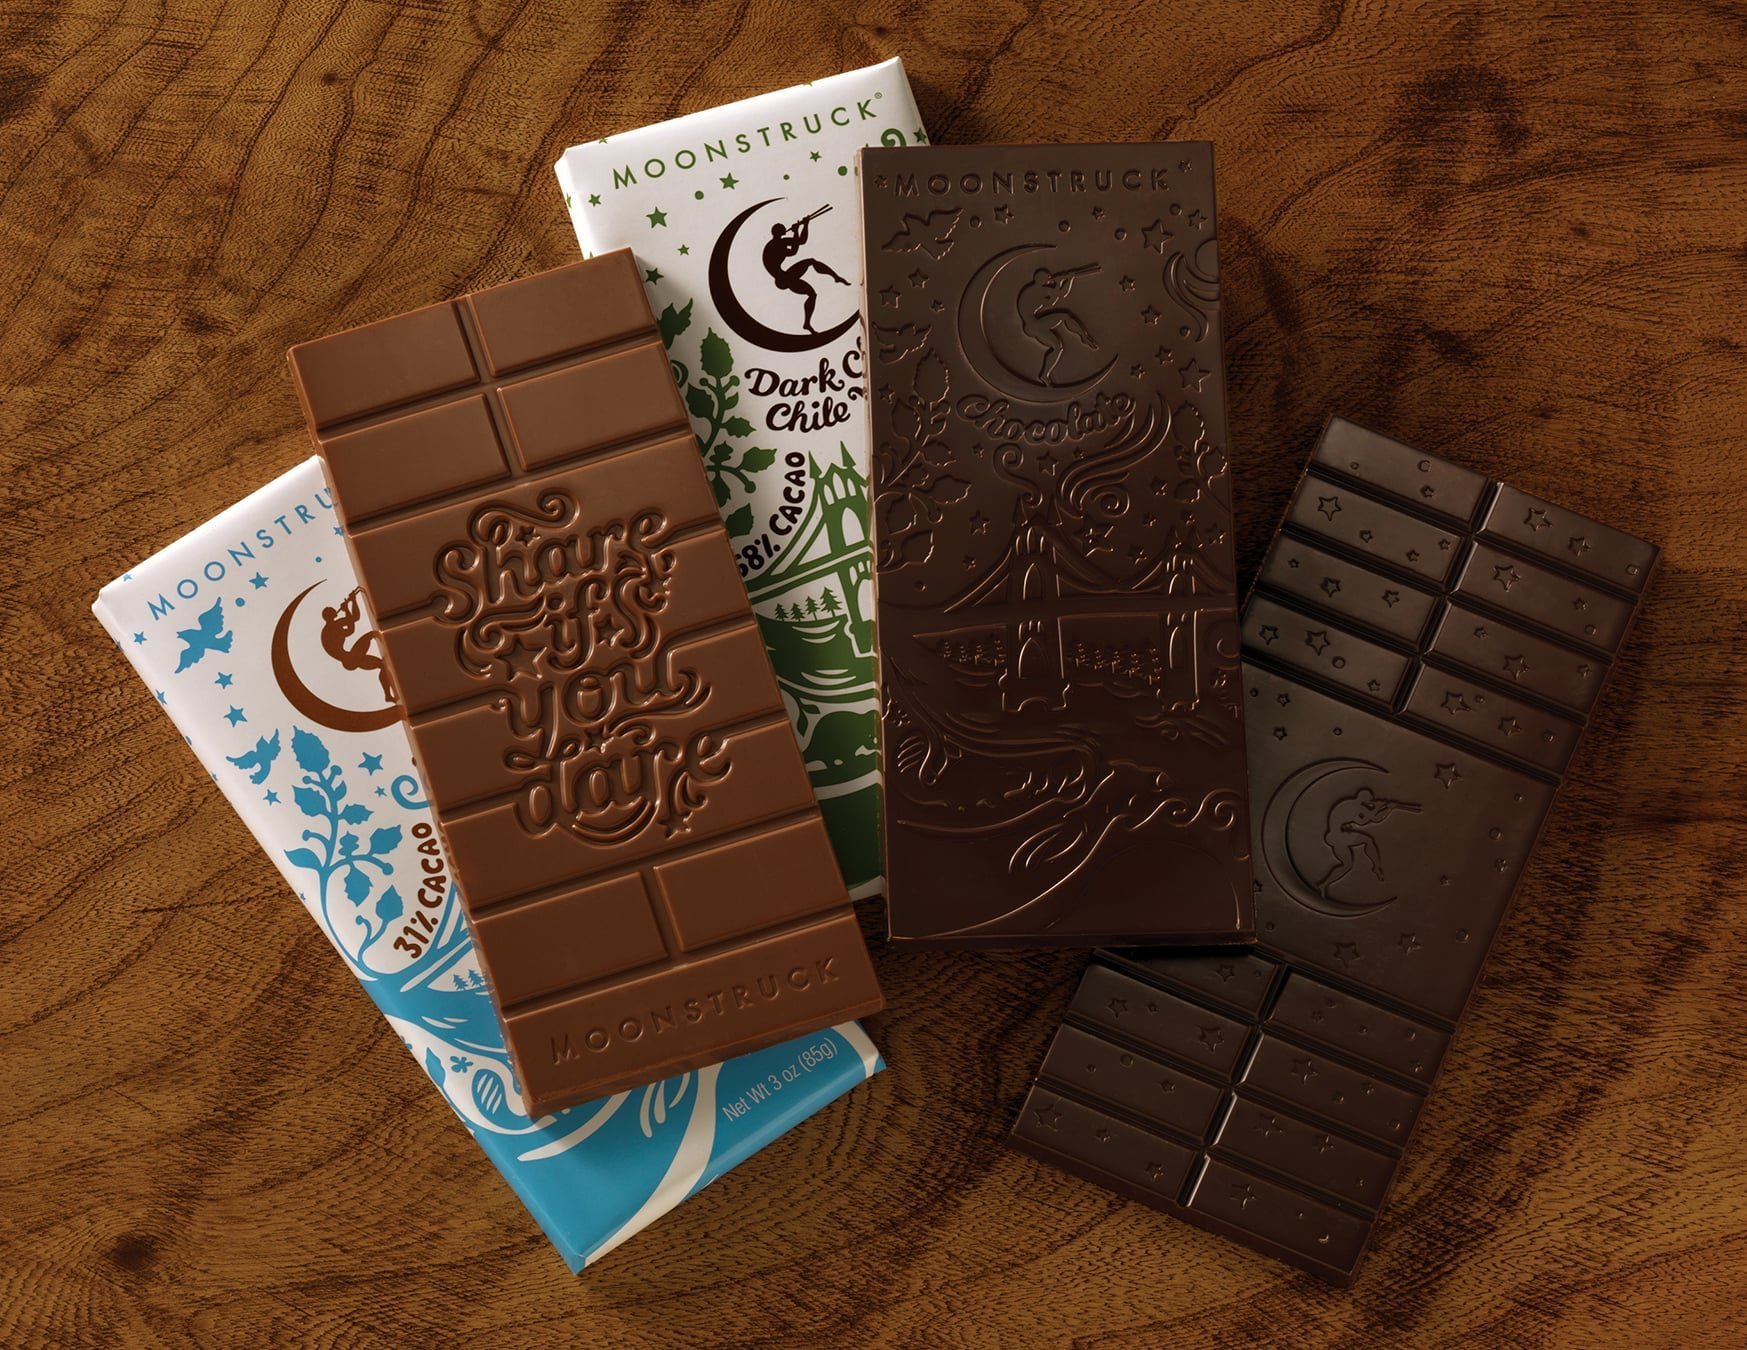 Пачки шоколада. Плитка шоколада в картонной упаковке. Шоколад в упаковке. Плитка шоколада в упаковке. Шоколад плиточный в упаковке.